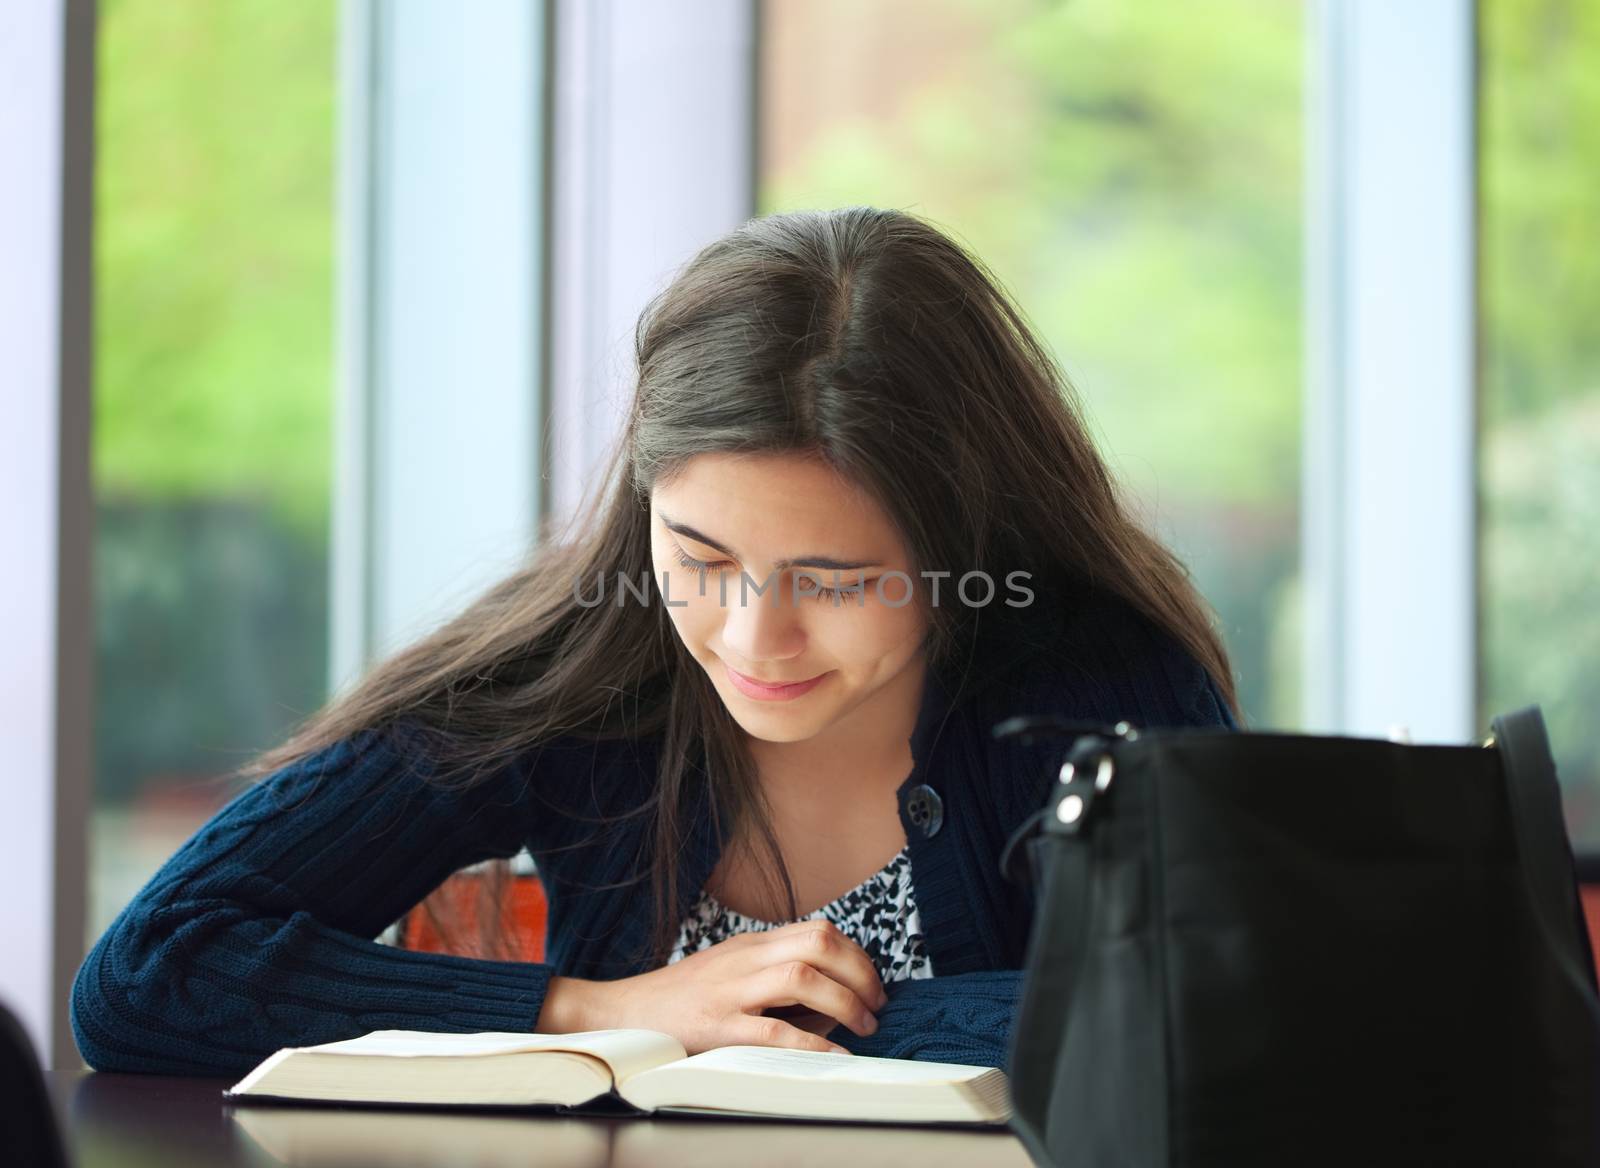 College student studying at school  by jarenwicklund